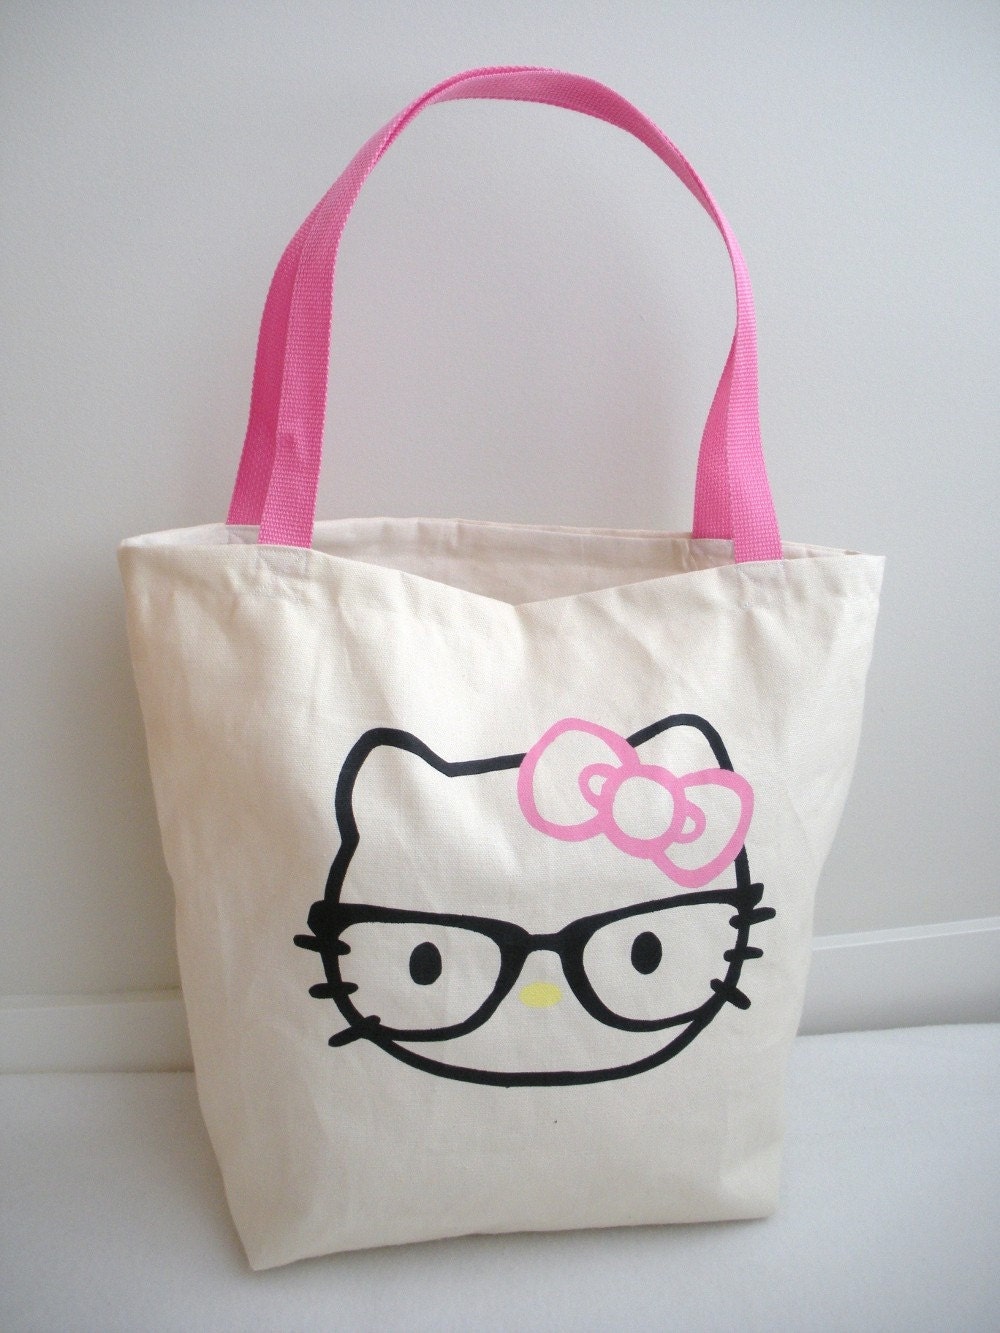 Tote Bag, Hello Kitty X Nerd Inspired, Eco-friendly, Organic Cotton Duck Canvas, Medium